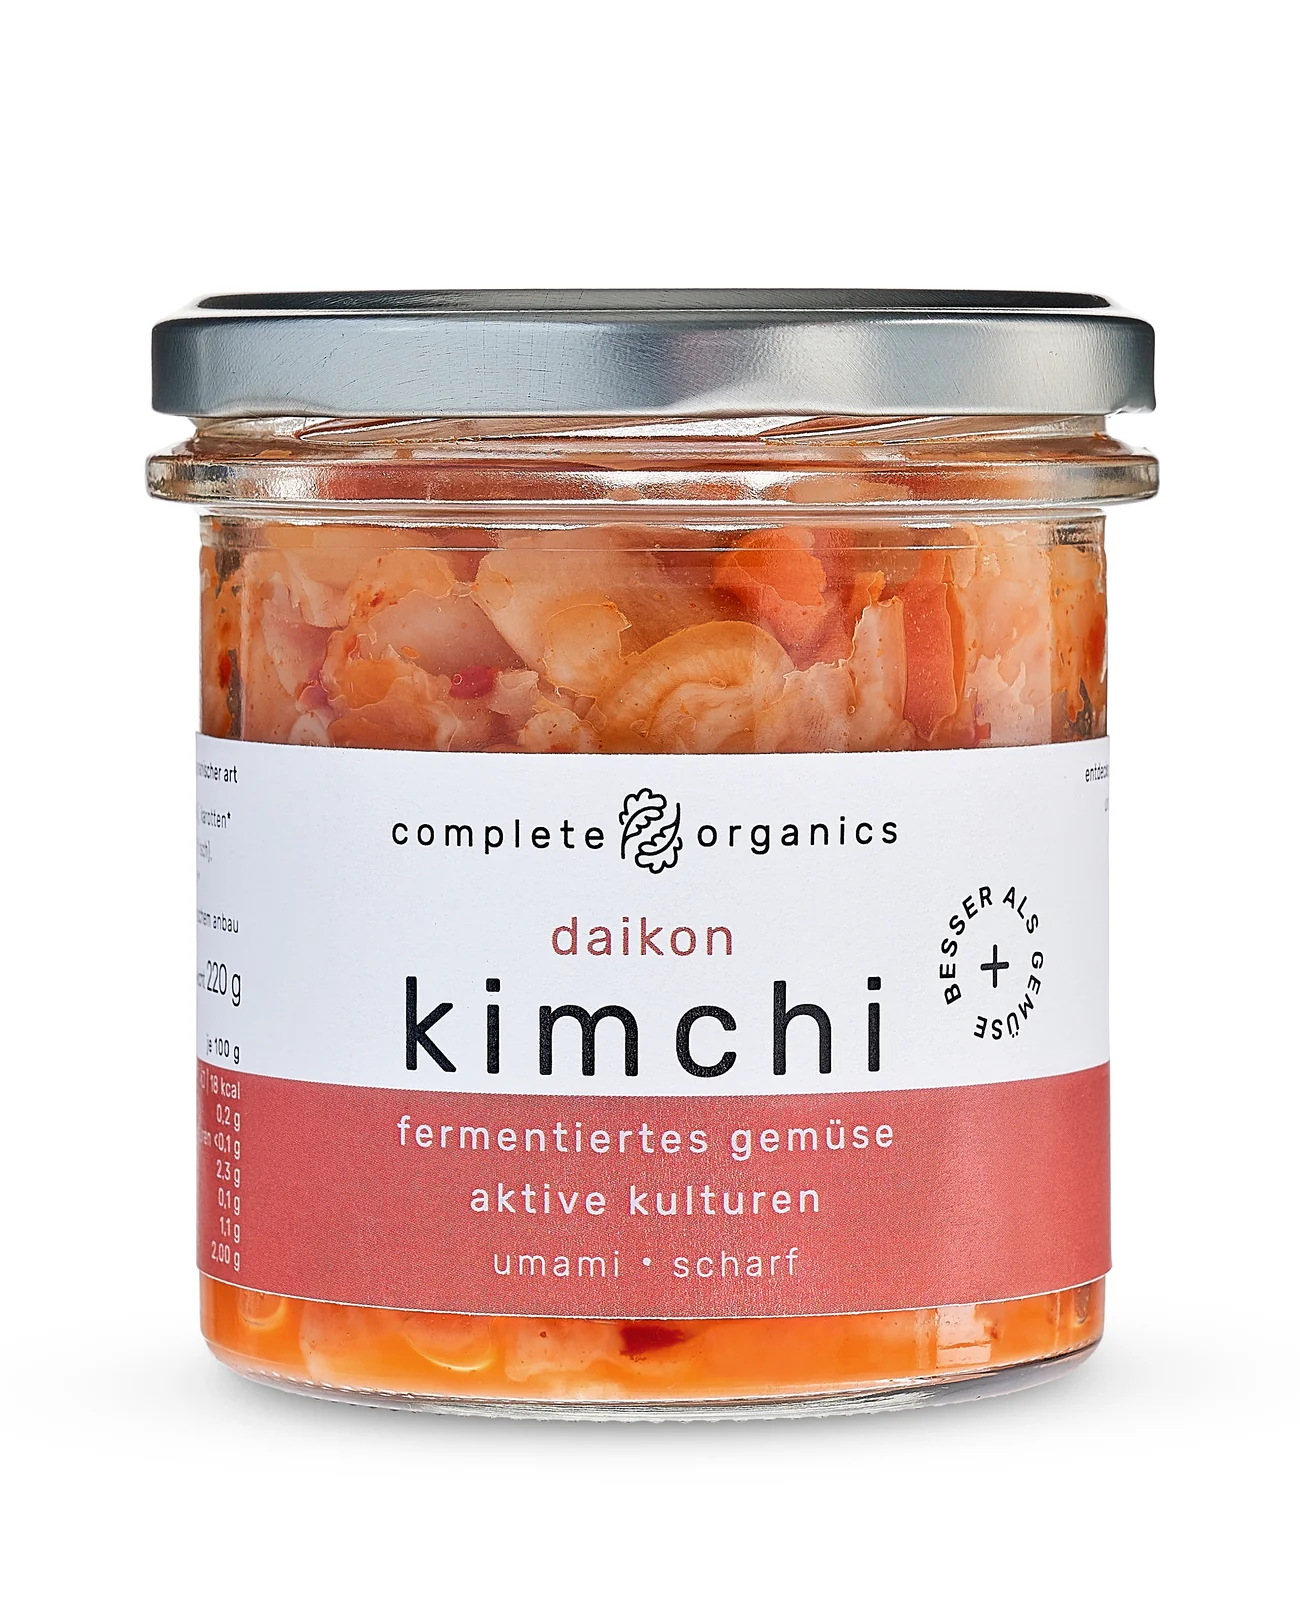 Completeorganics Kimchi daikon bio 240g